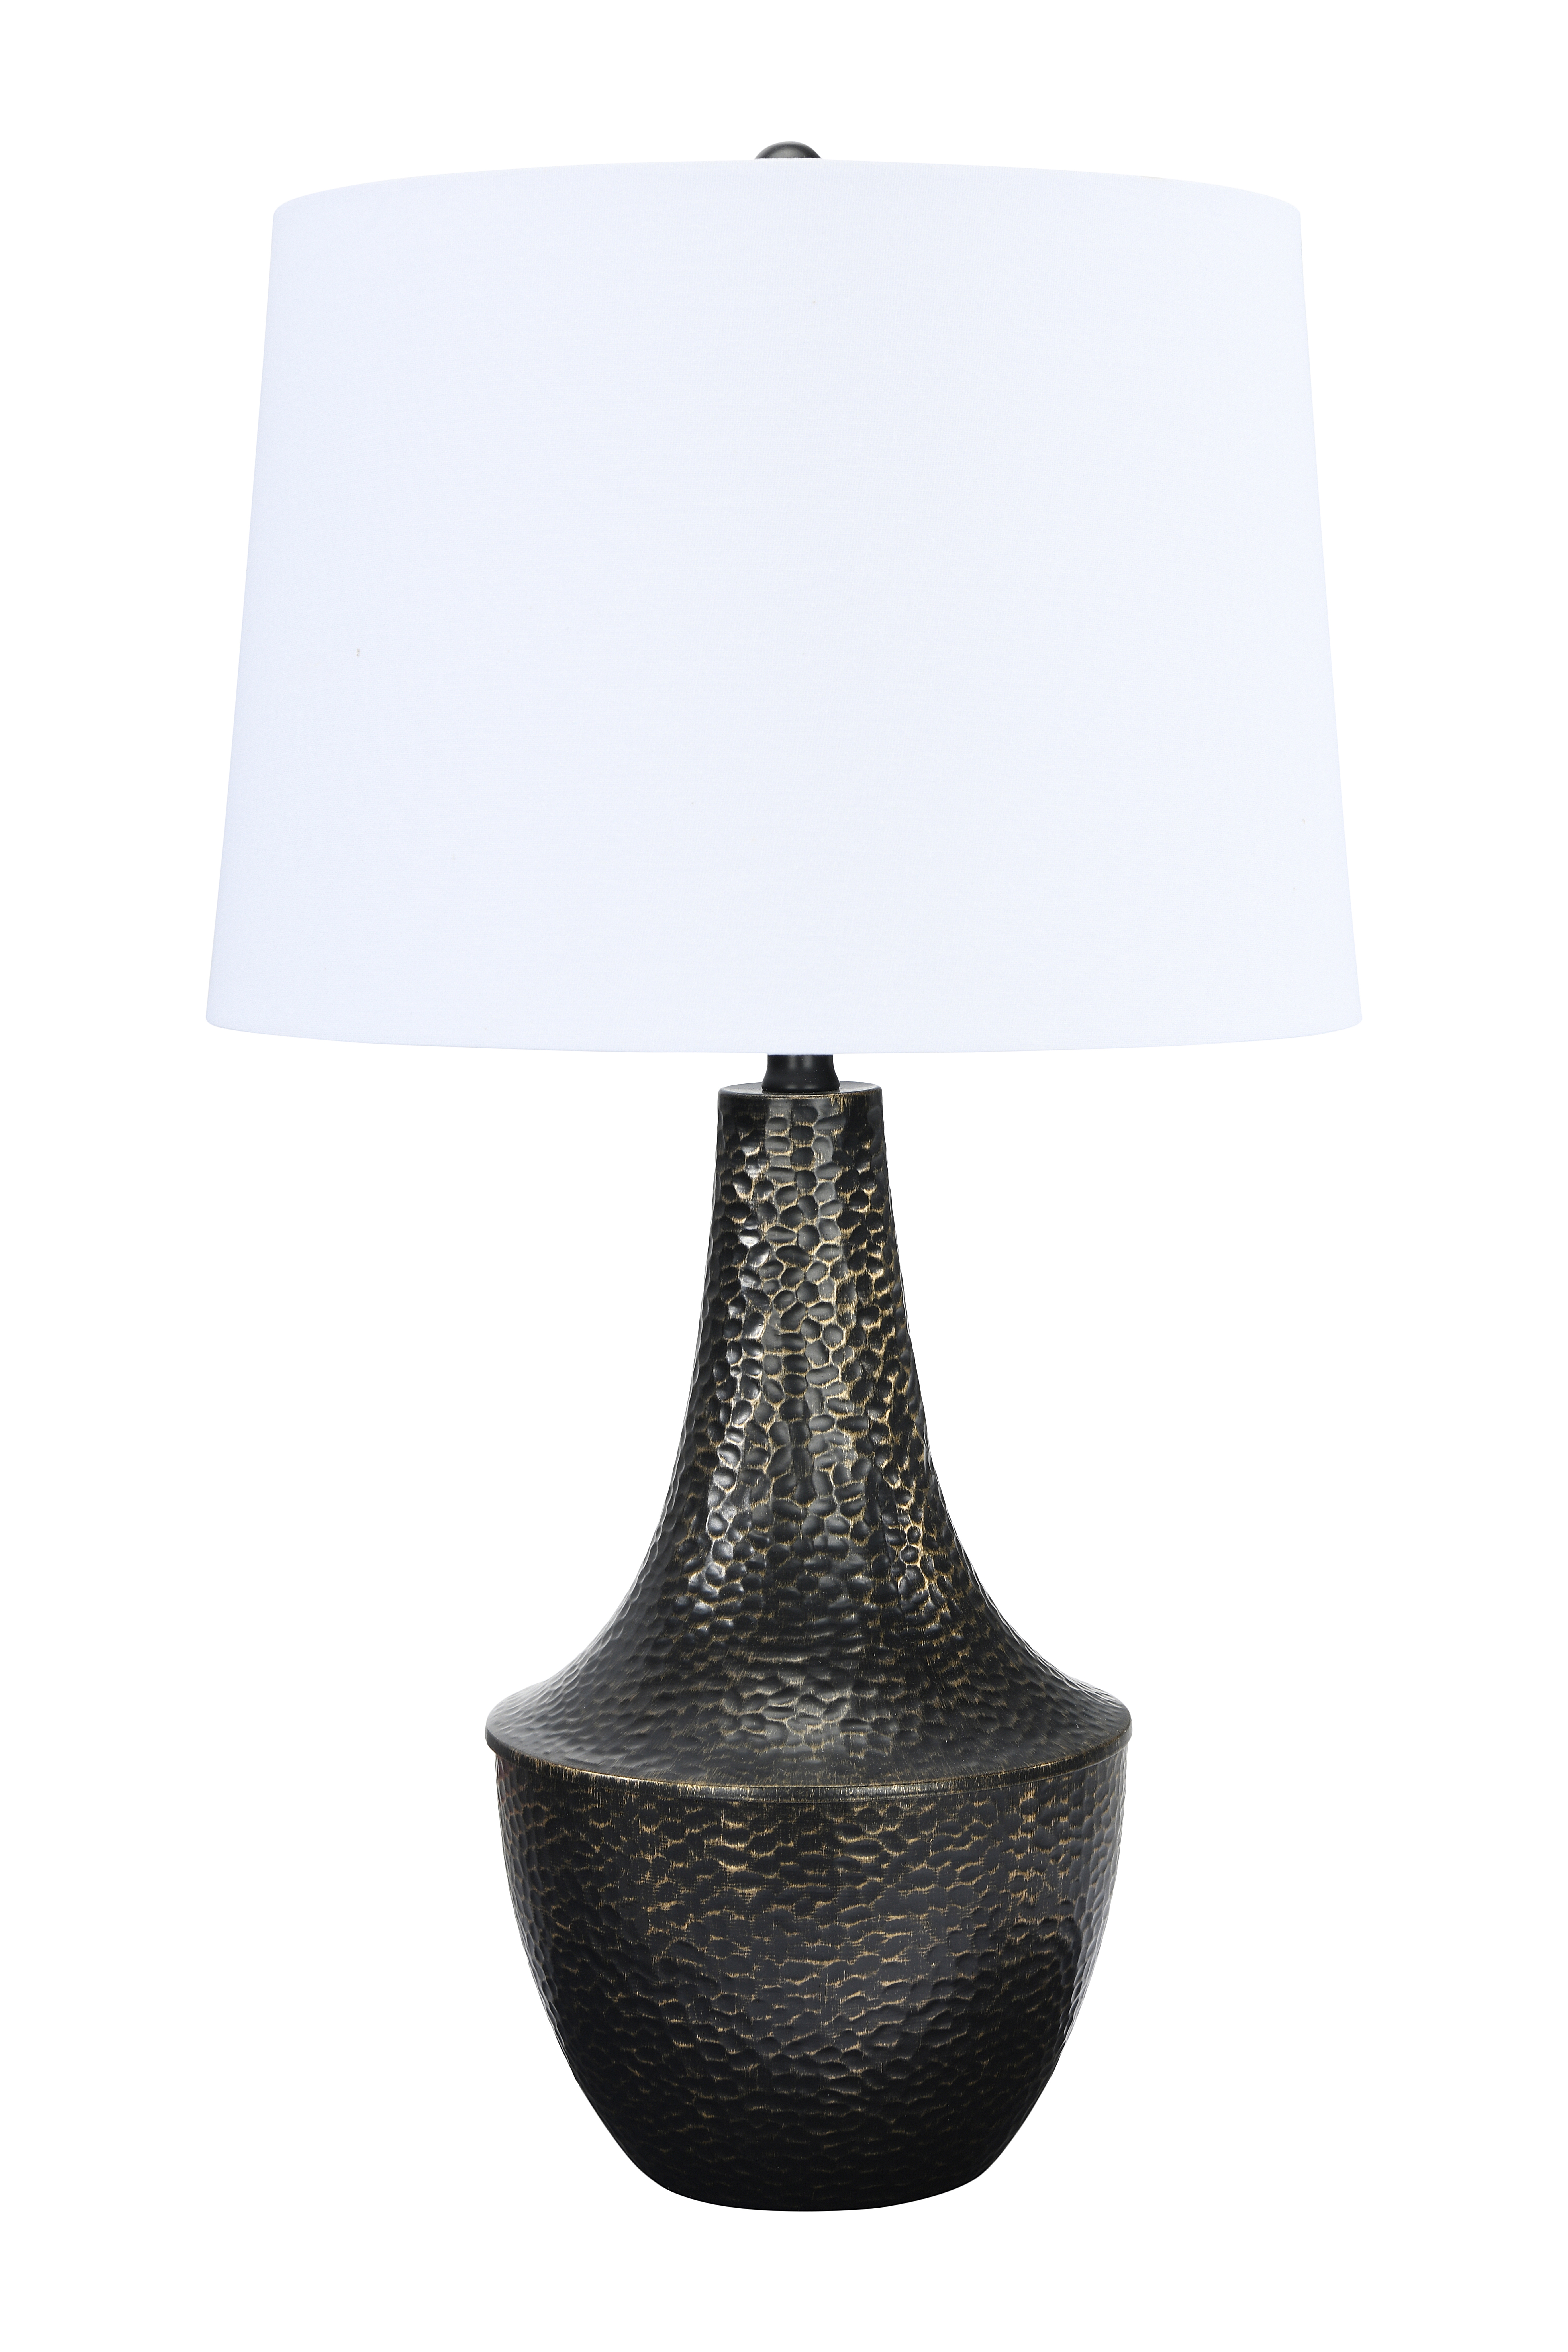 Keira Lamp - Image 0